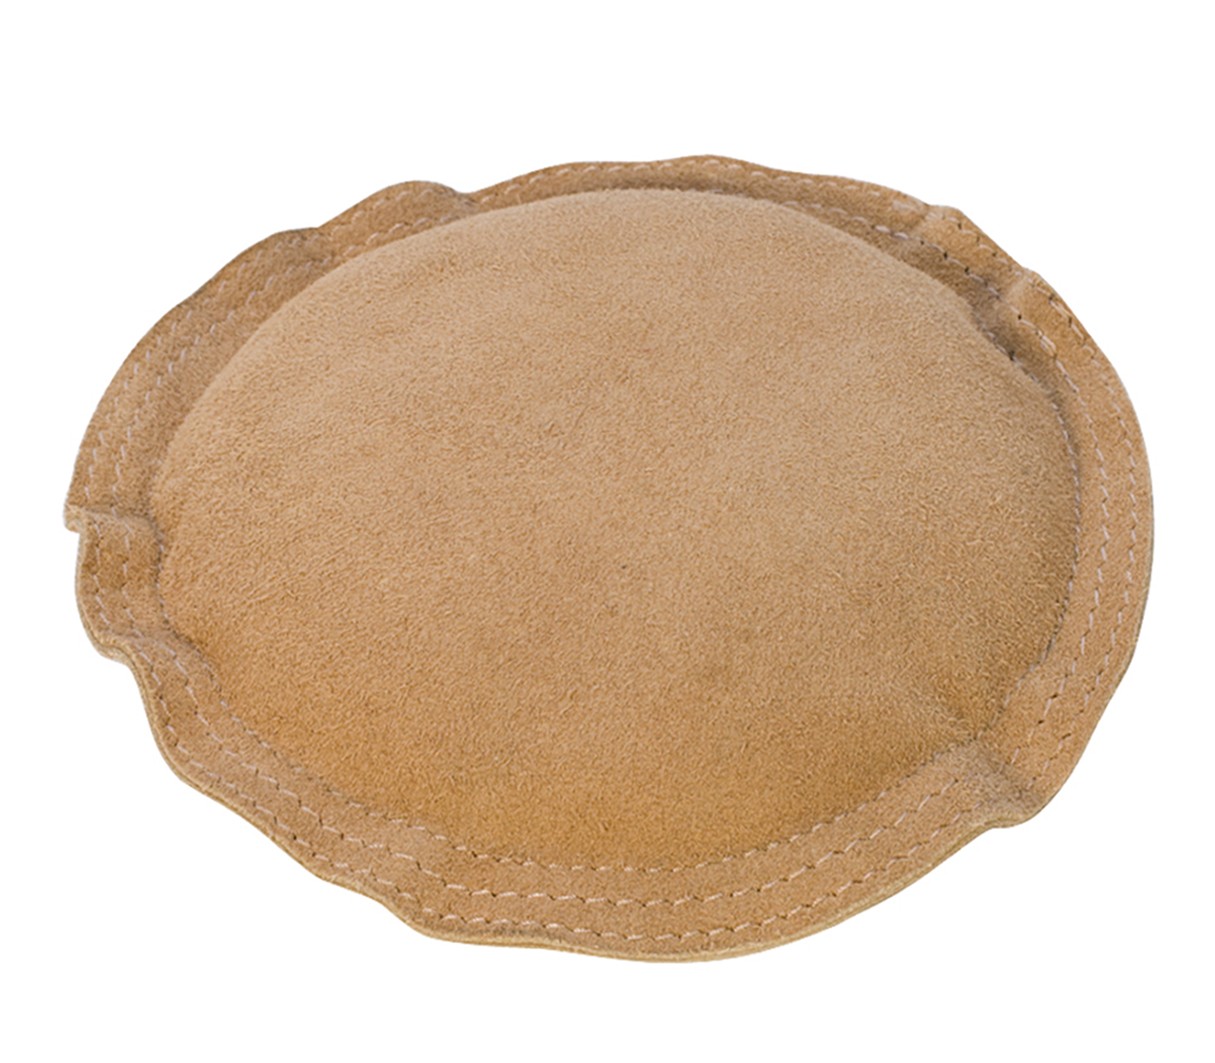 7" Round Leather Sandbag